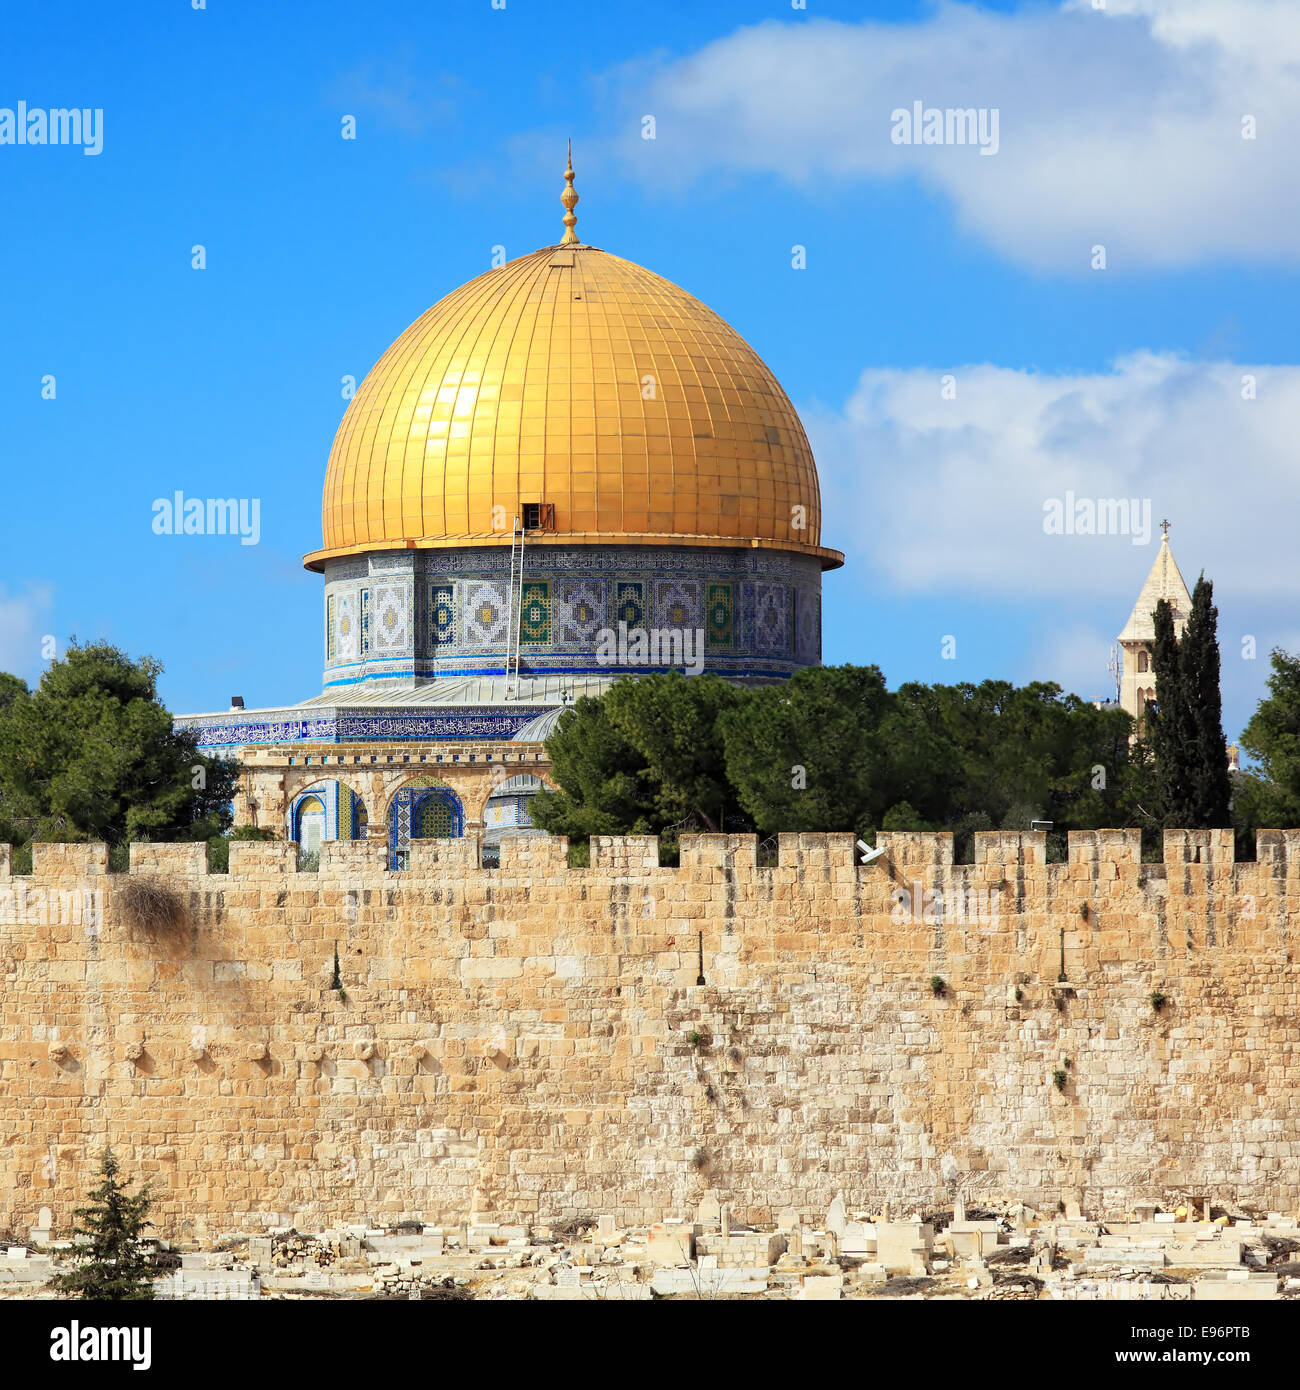 Al-Aqsa Mosque on Temple Mount of Old City, Jerusalem Stock Photo